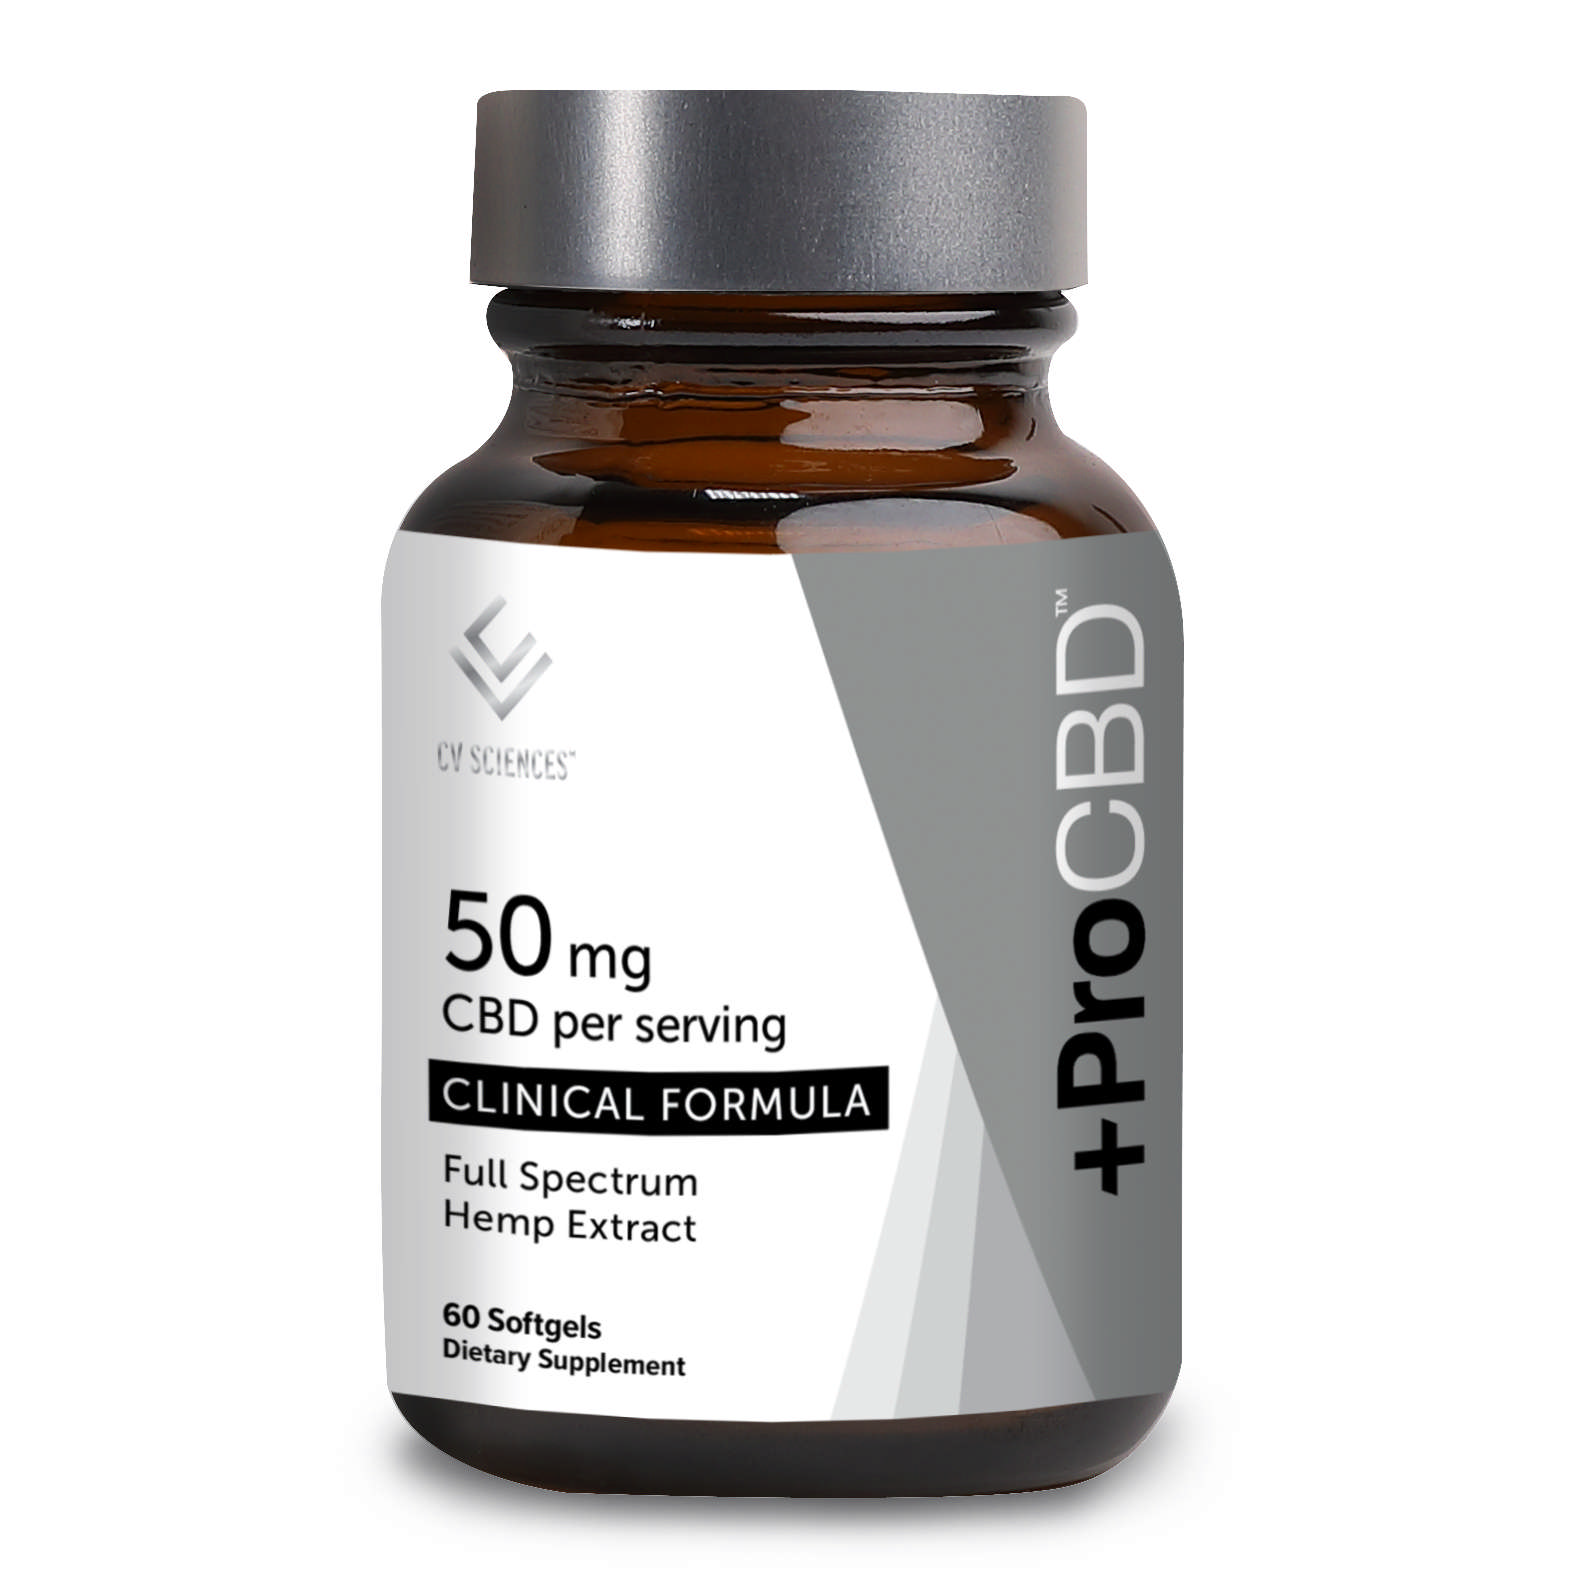 Cv Sciences - Cbd Oil Plus Pro 50 mg softgel